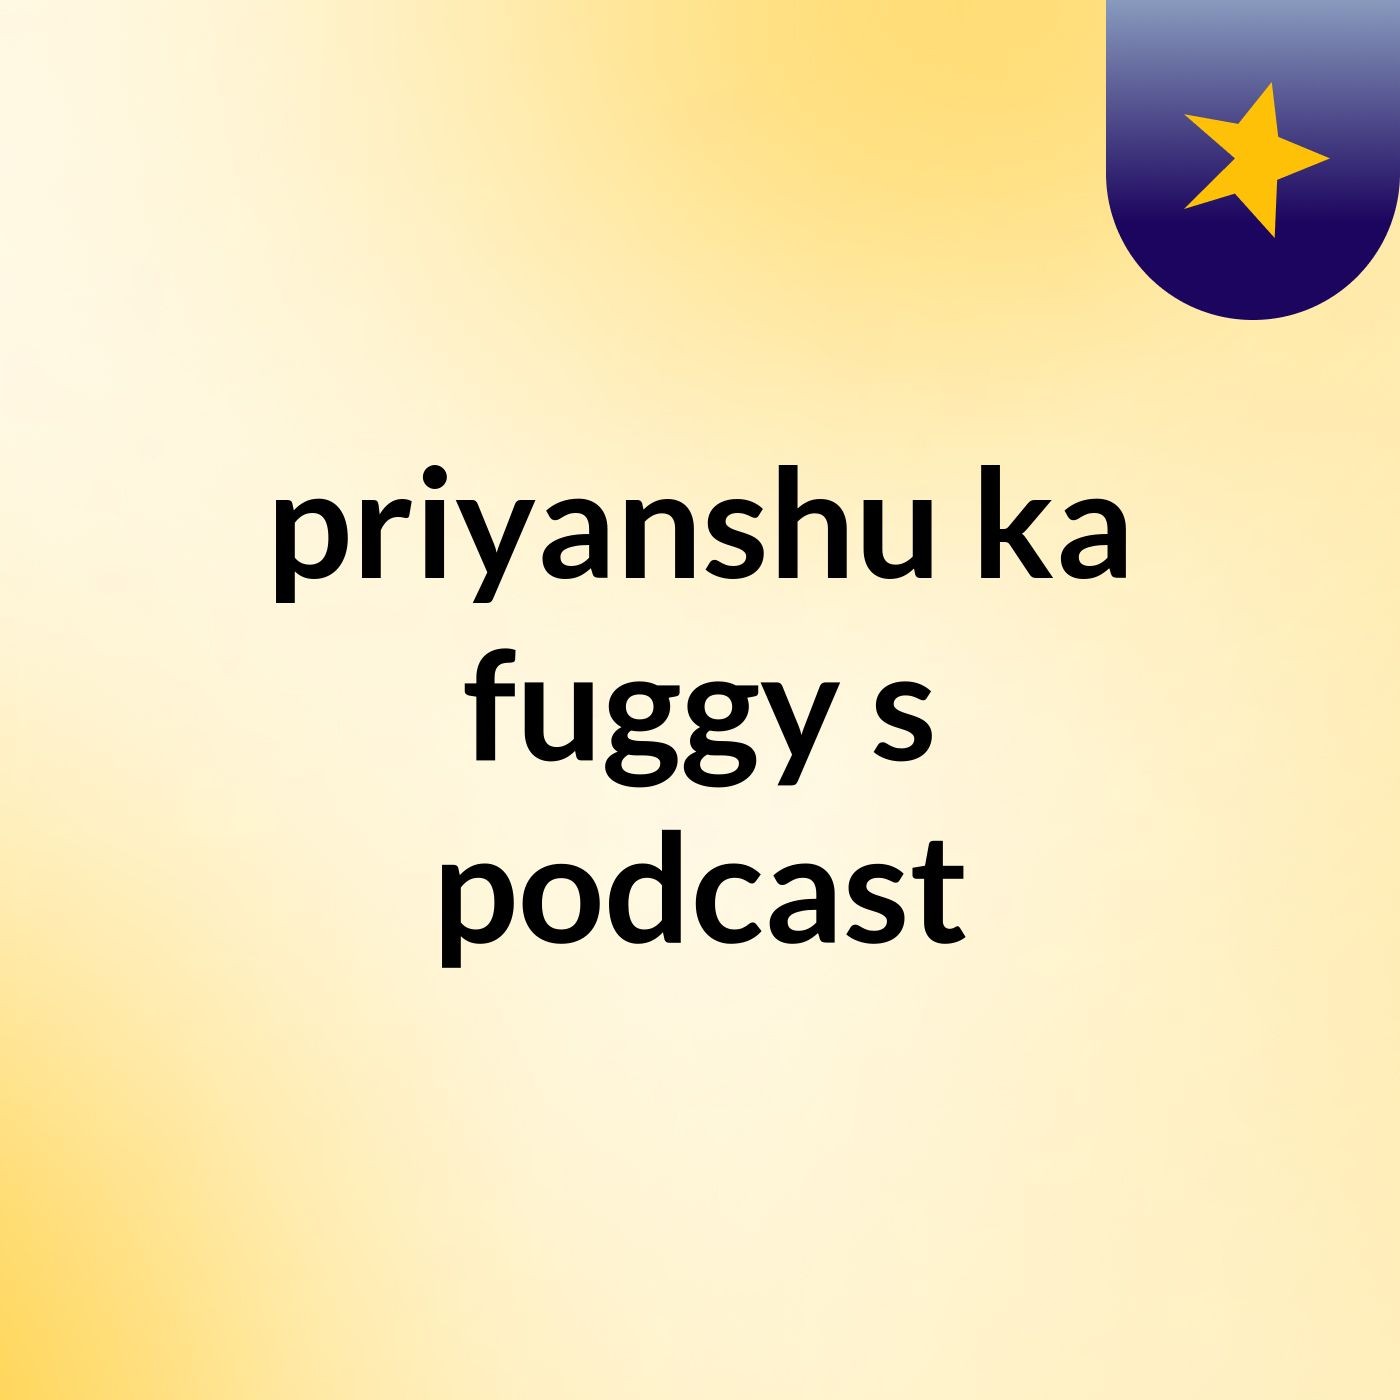 priyanshu ka fuggy's podcast